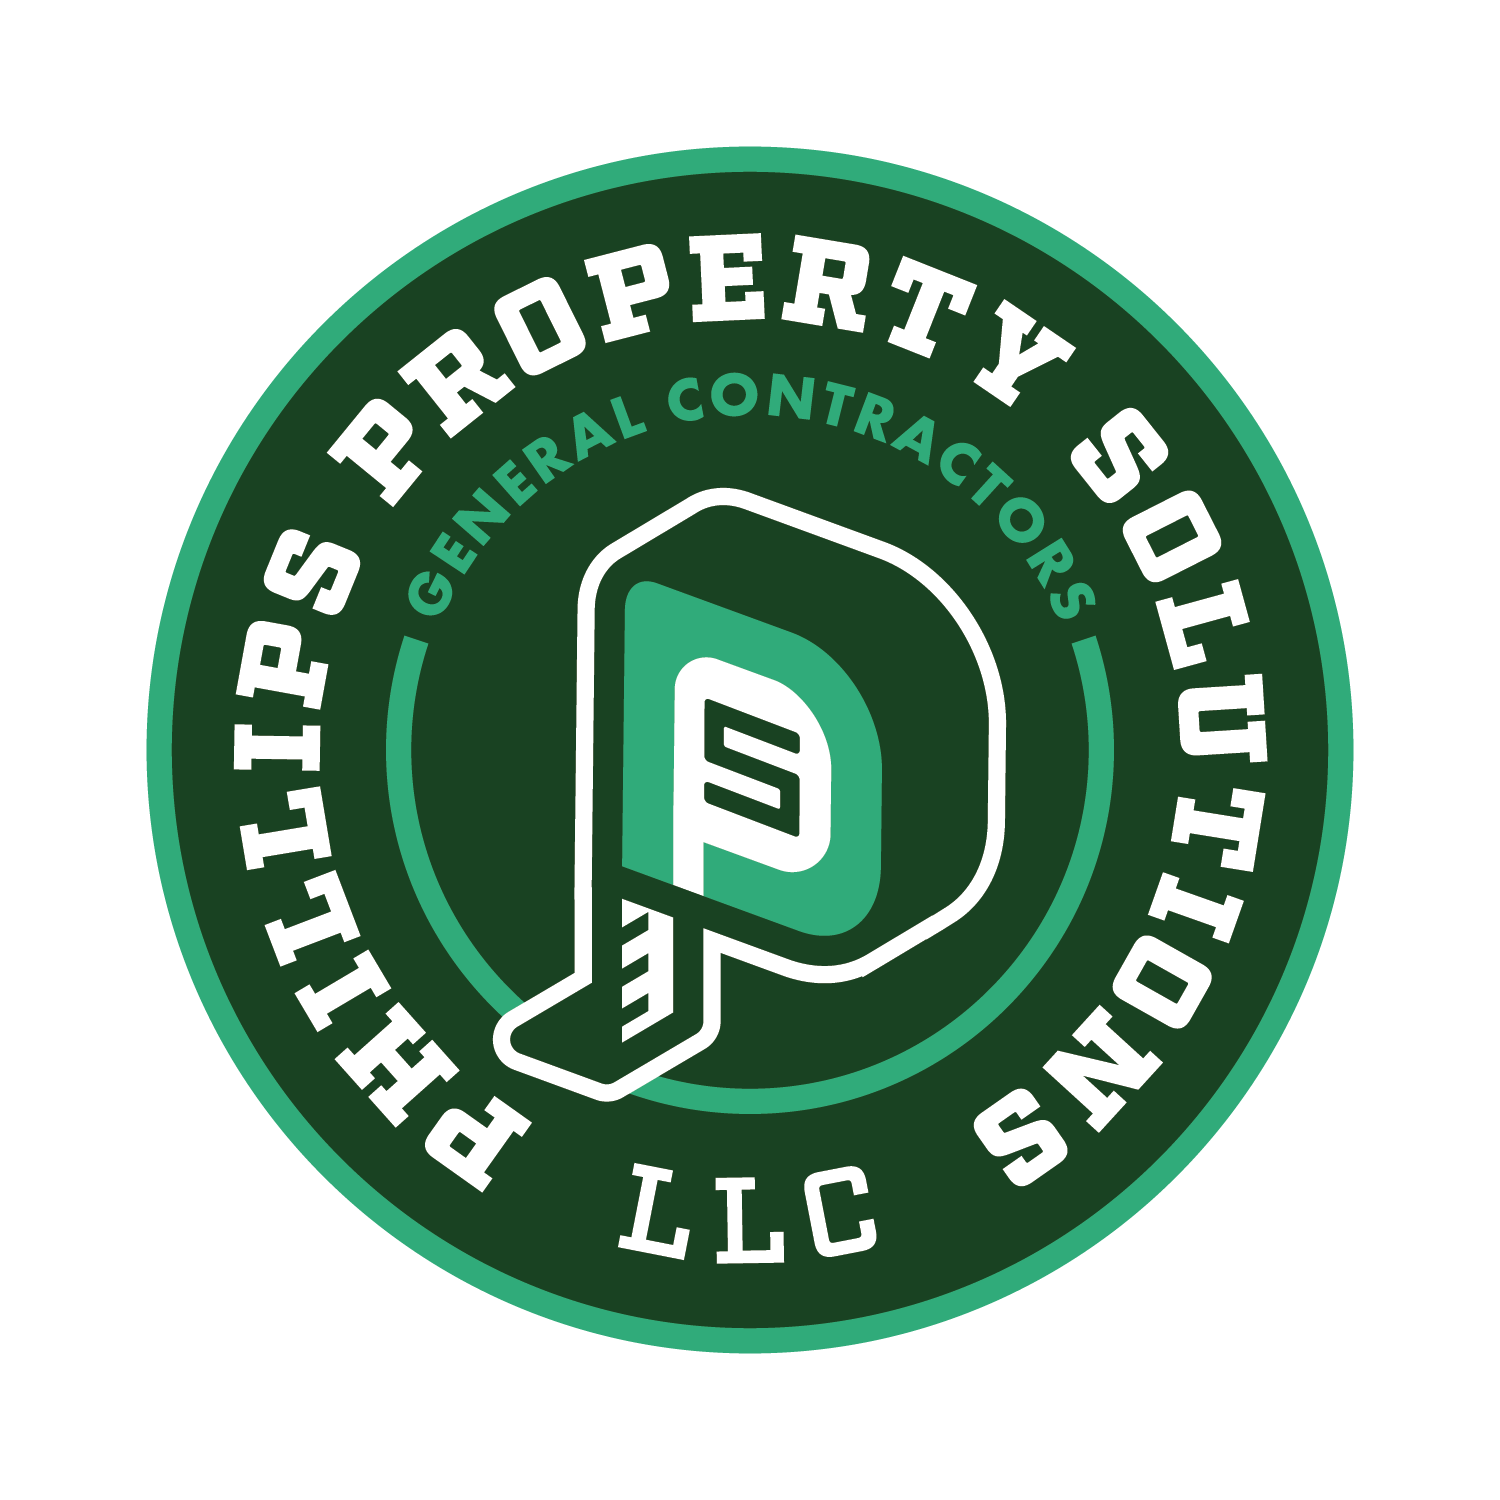 Phillips property logo stroked